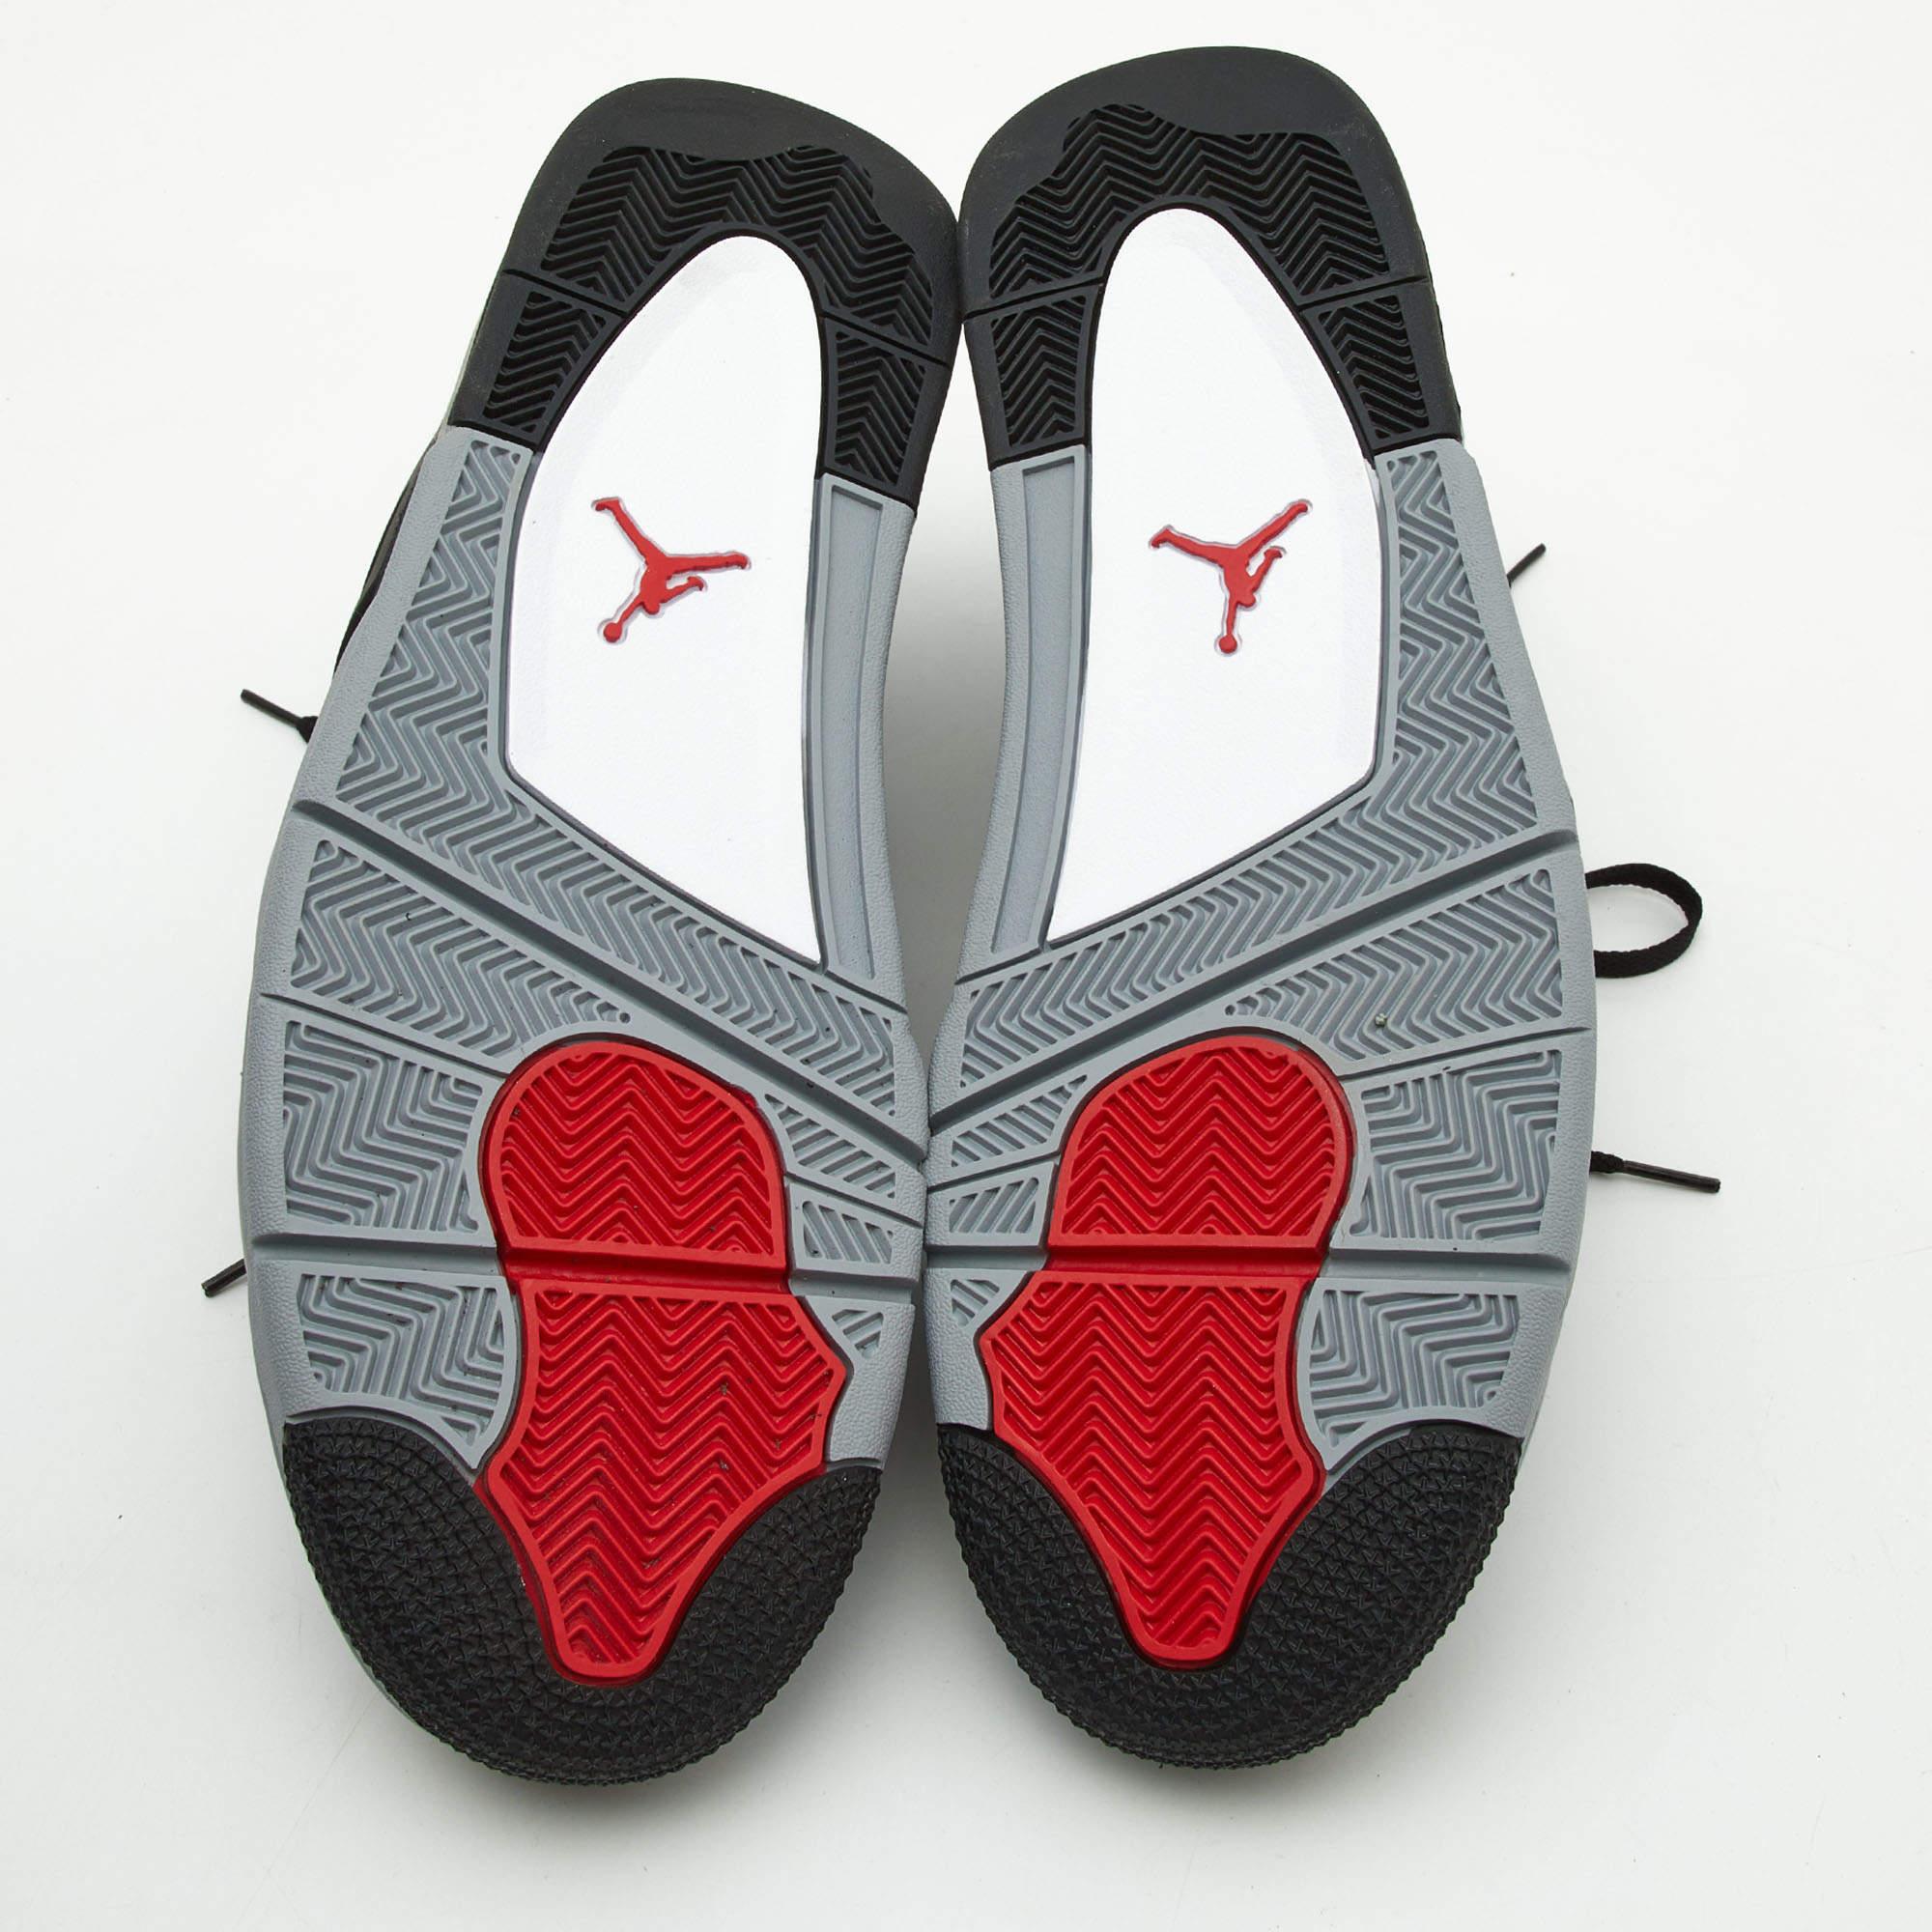 Air Jordans Black Canvas and Suede Jordan 4 Retro Sneakers Size 50.5 3